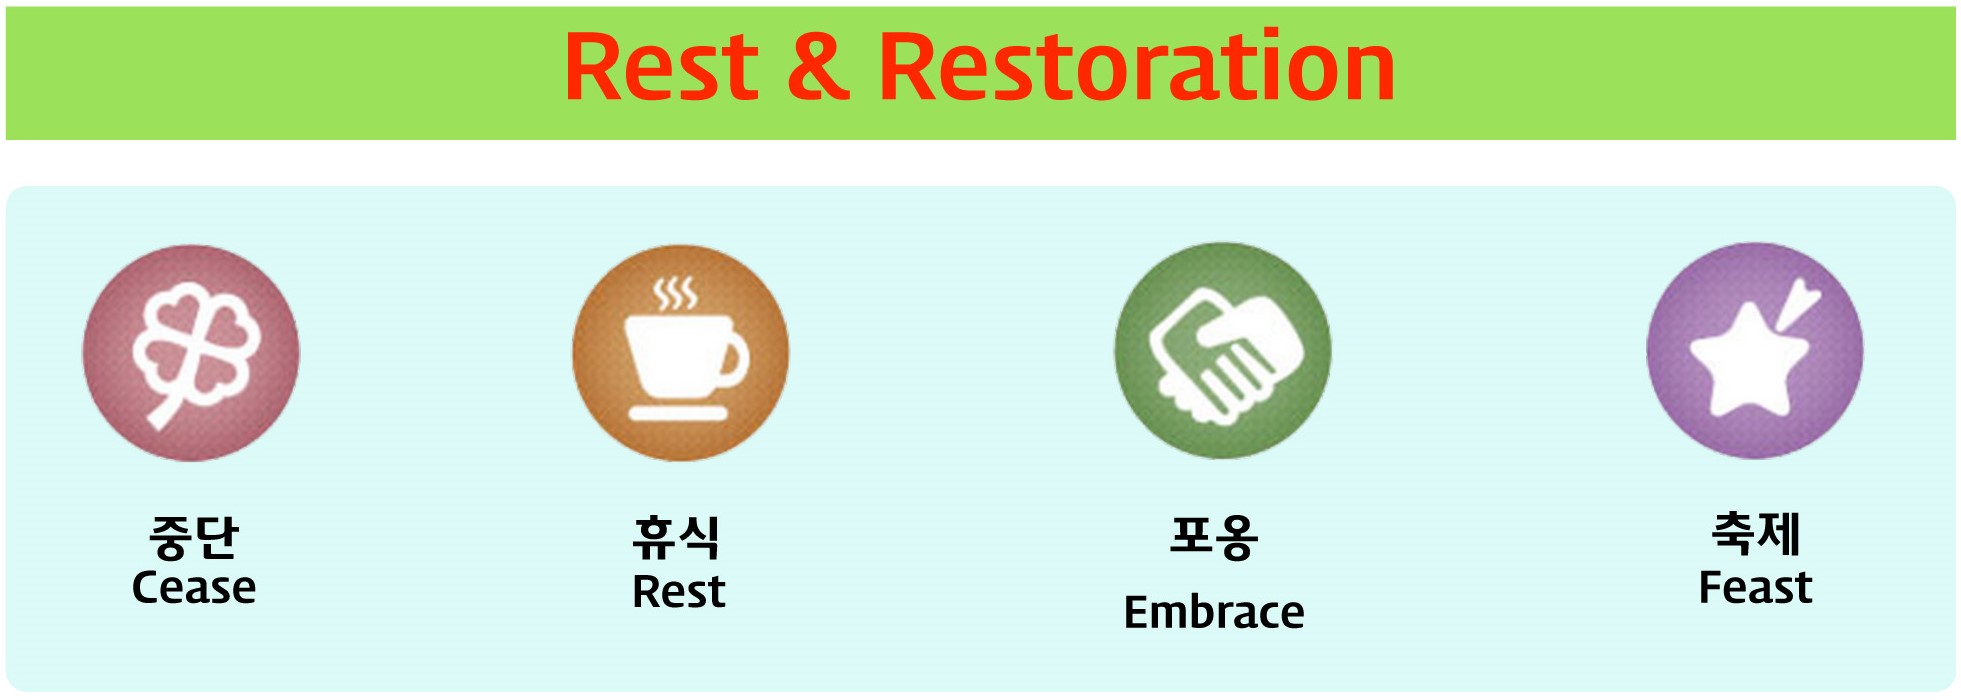 rest_restoration.jpg